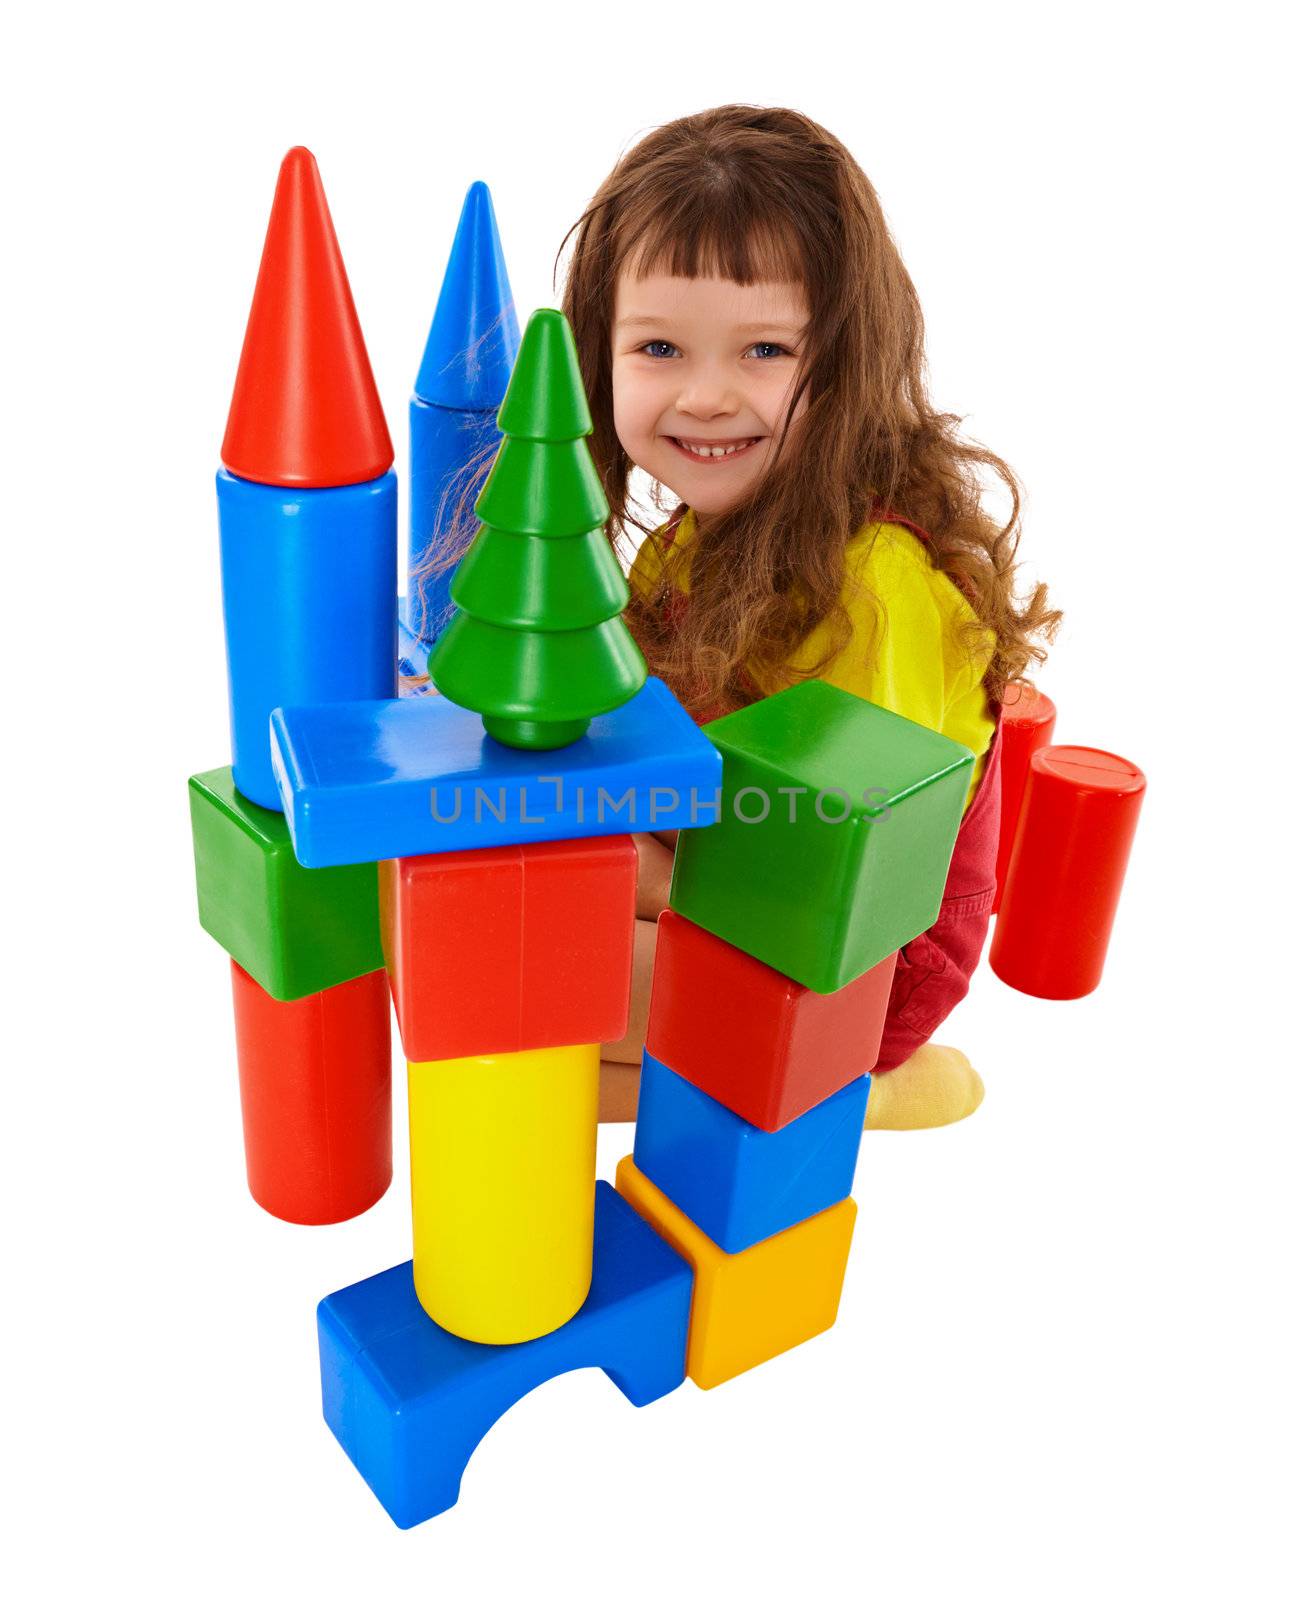 Child built a castle from color cubes by pzaxe